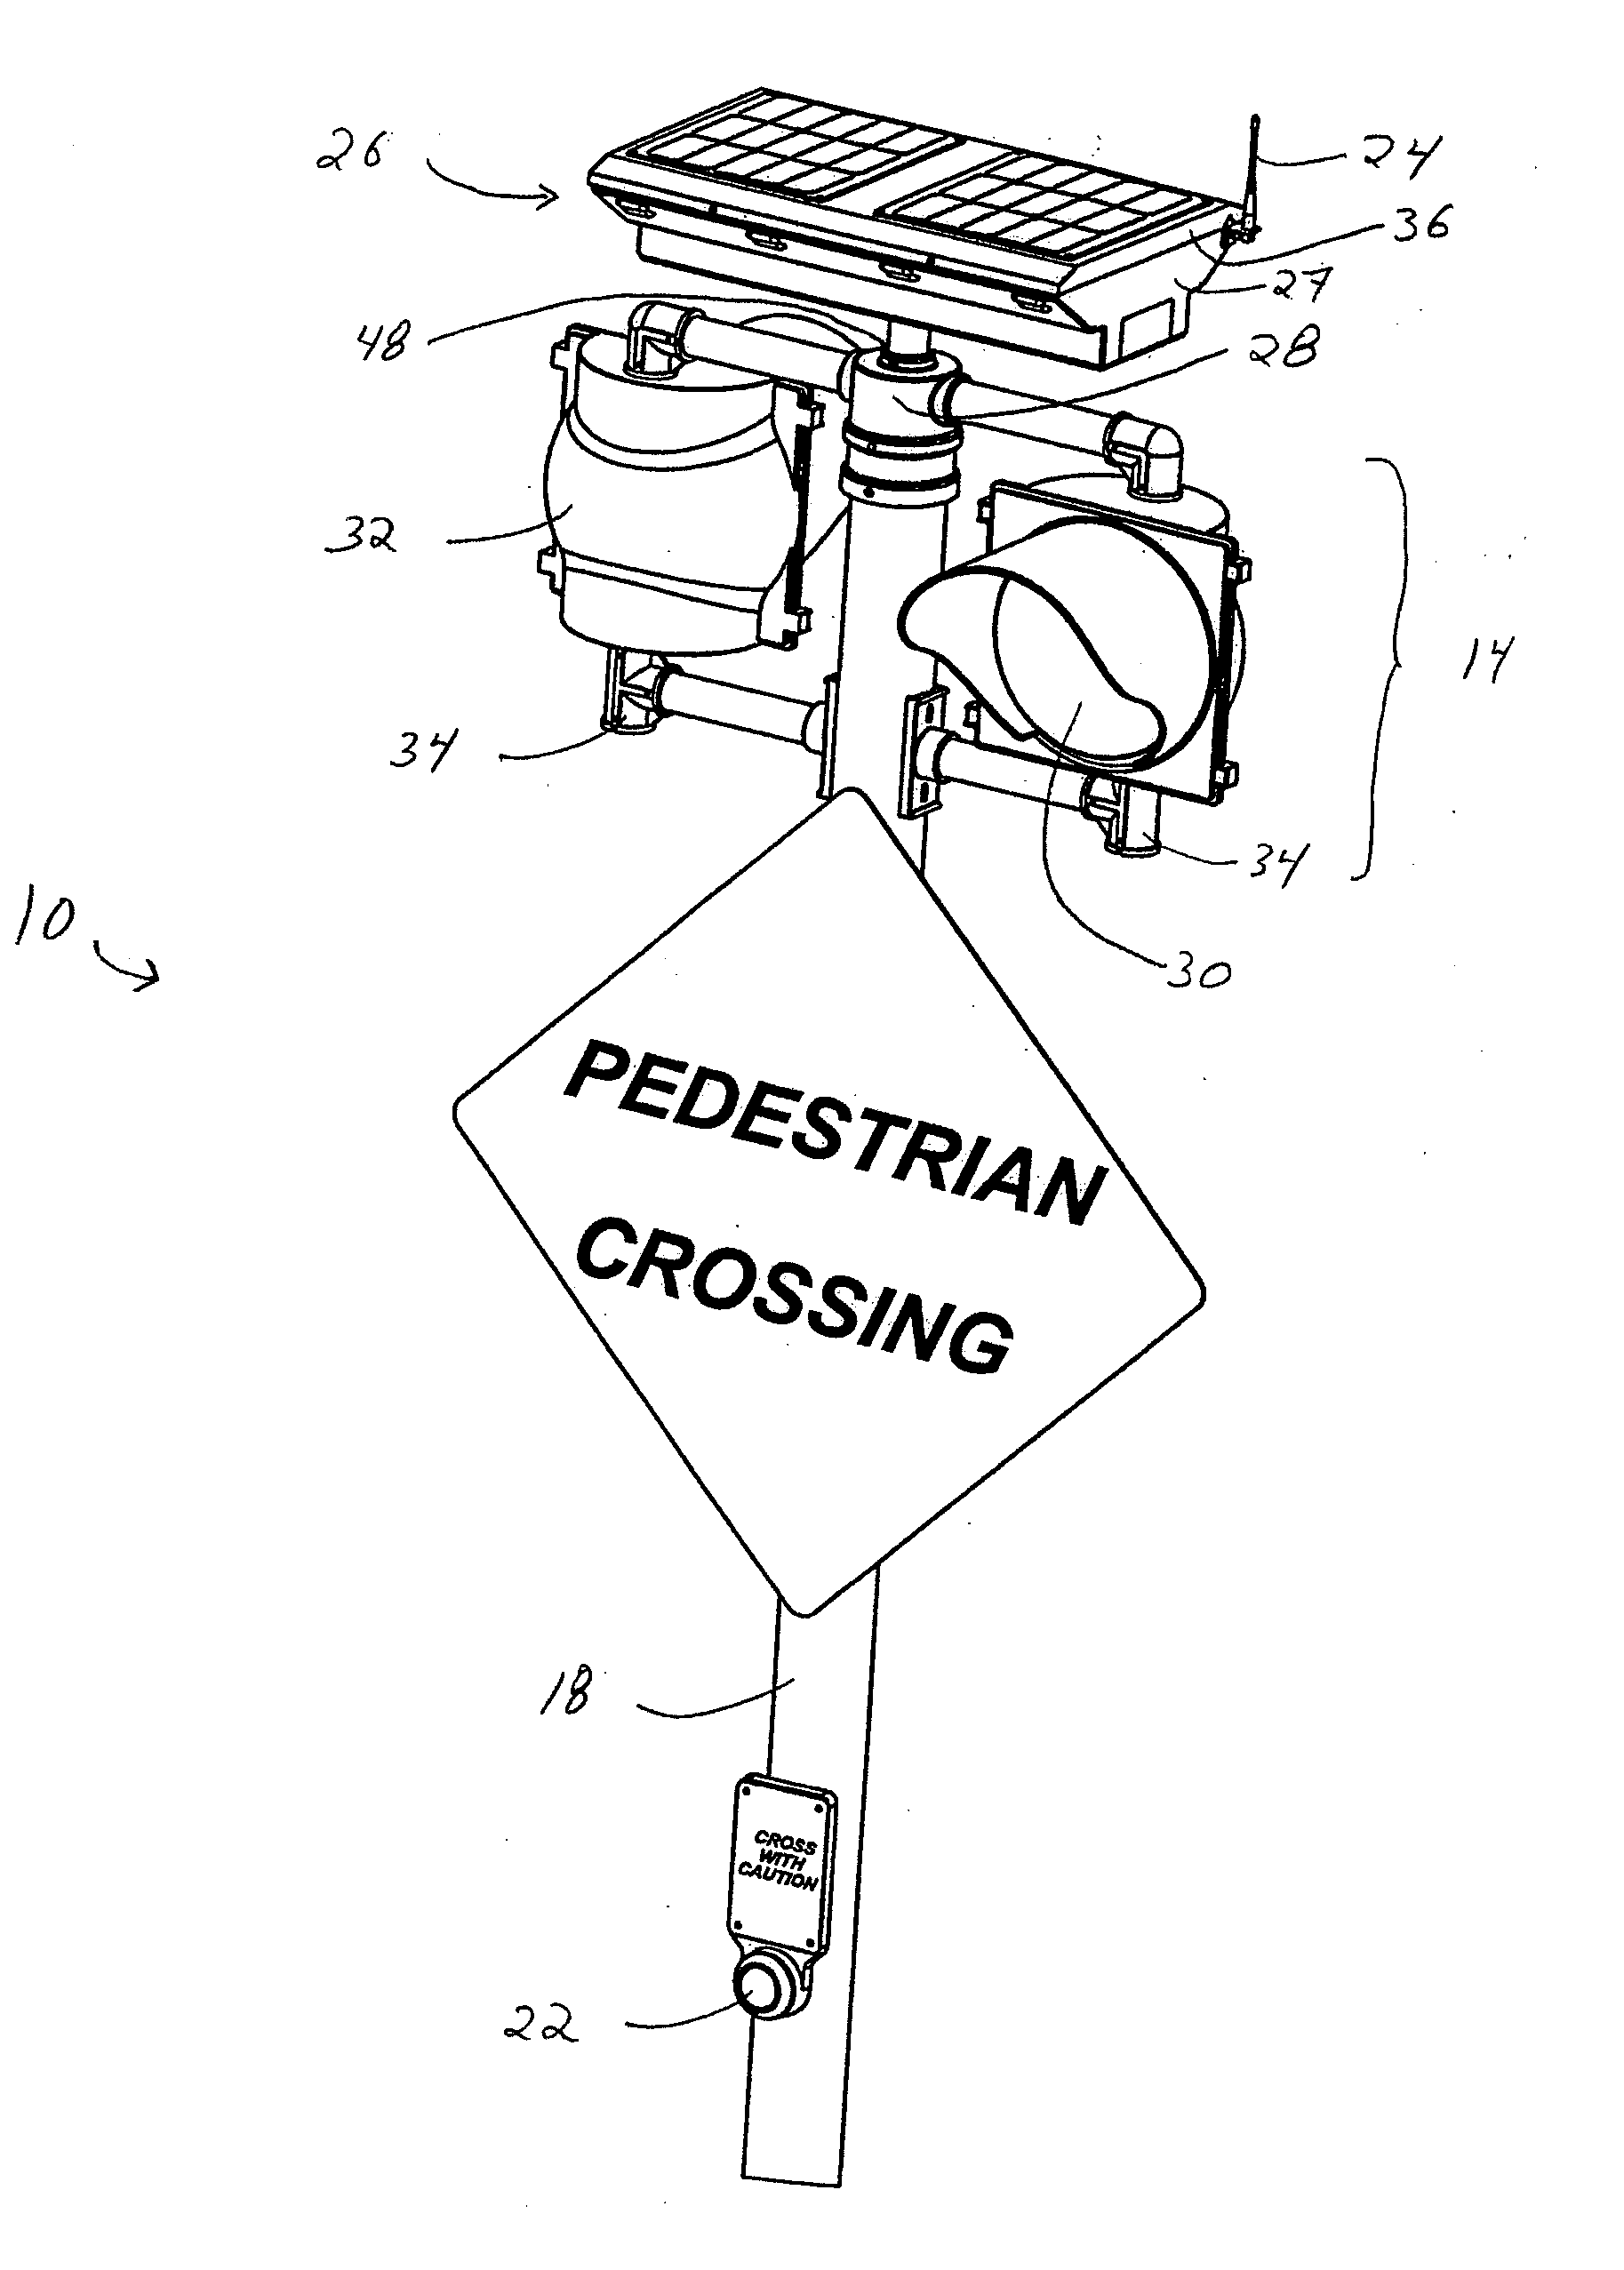 Solar-powered wireless crosswalk warning system